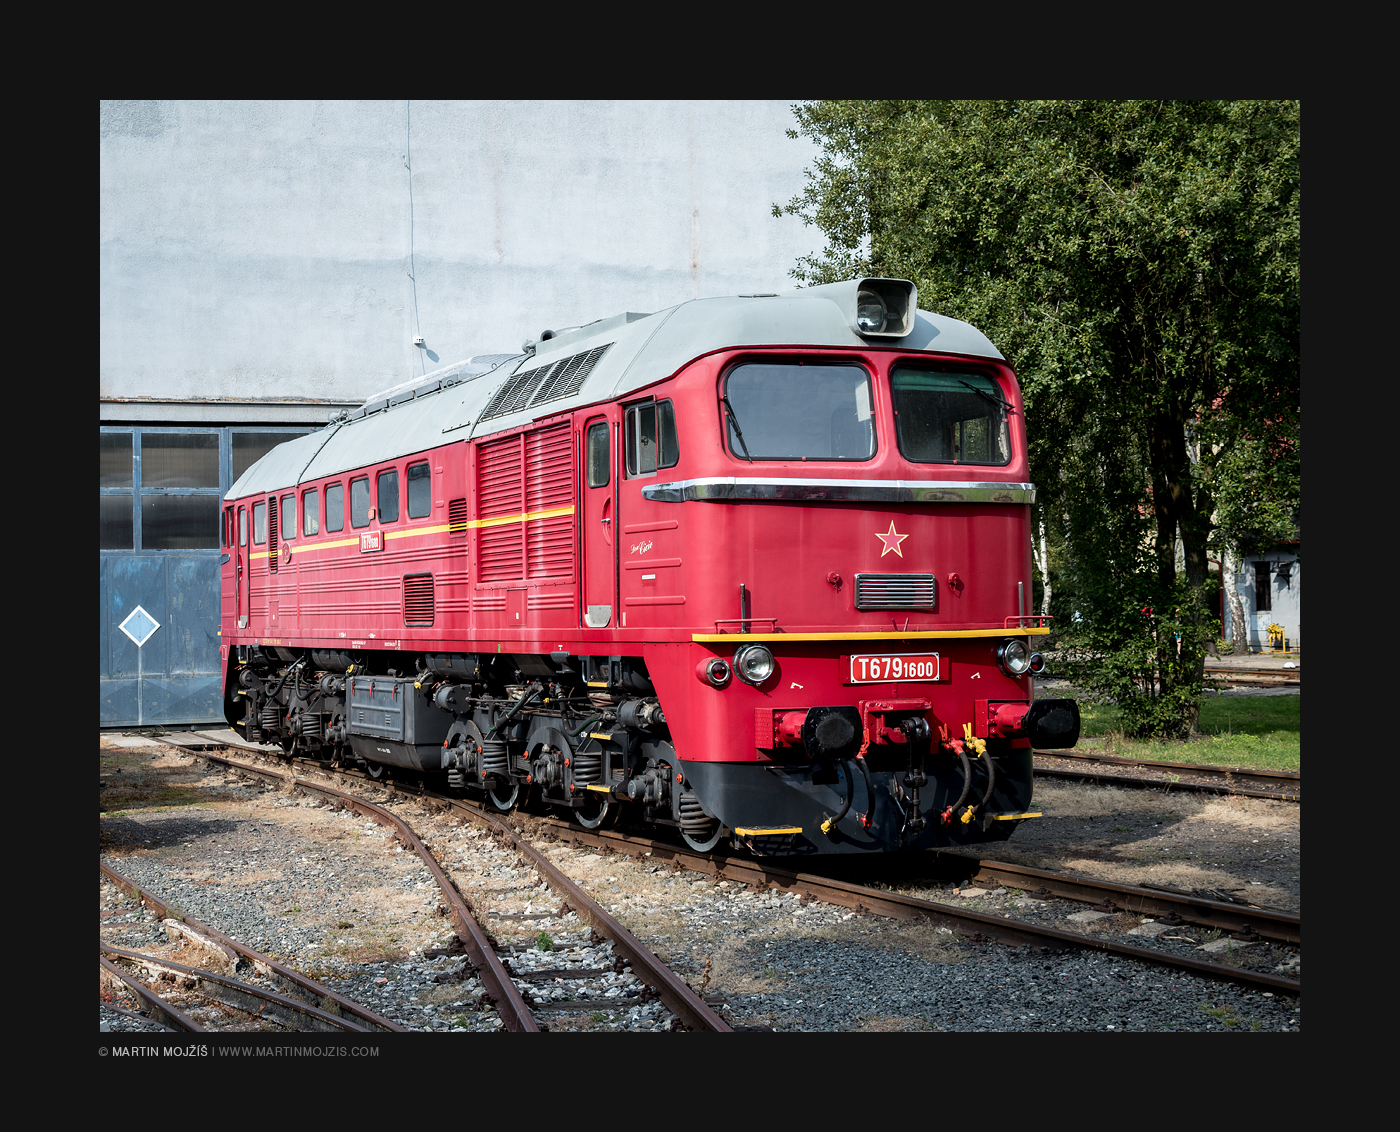 Lokomotiva T679 1600, zvaná Sergej. Železniční muzeum v Lužné u Rakovníka.